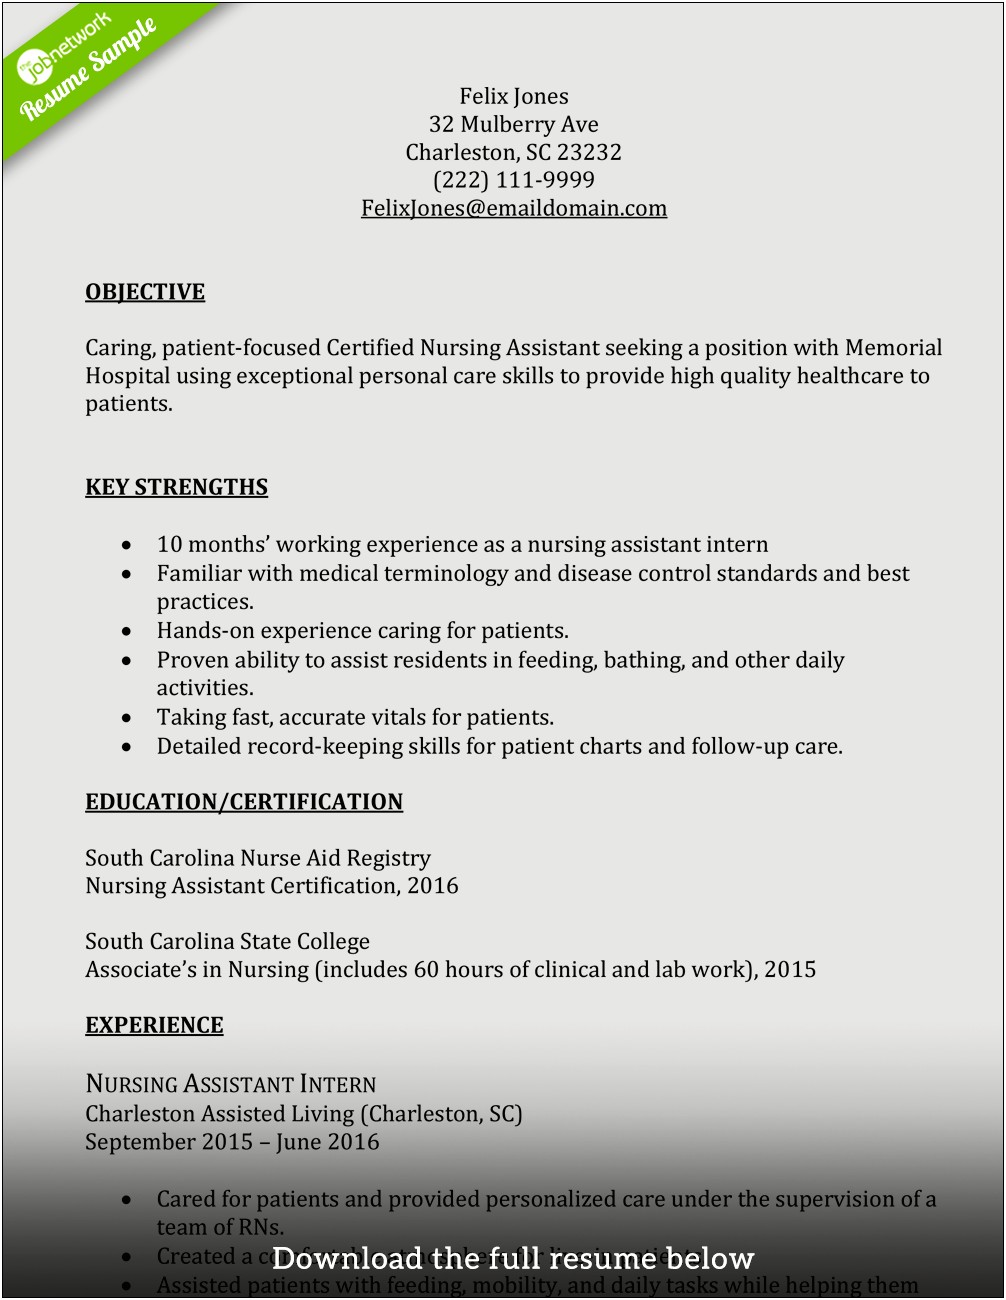 Personal Care Assistant Description For Resume